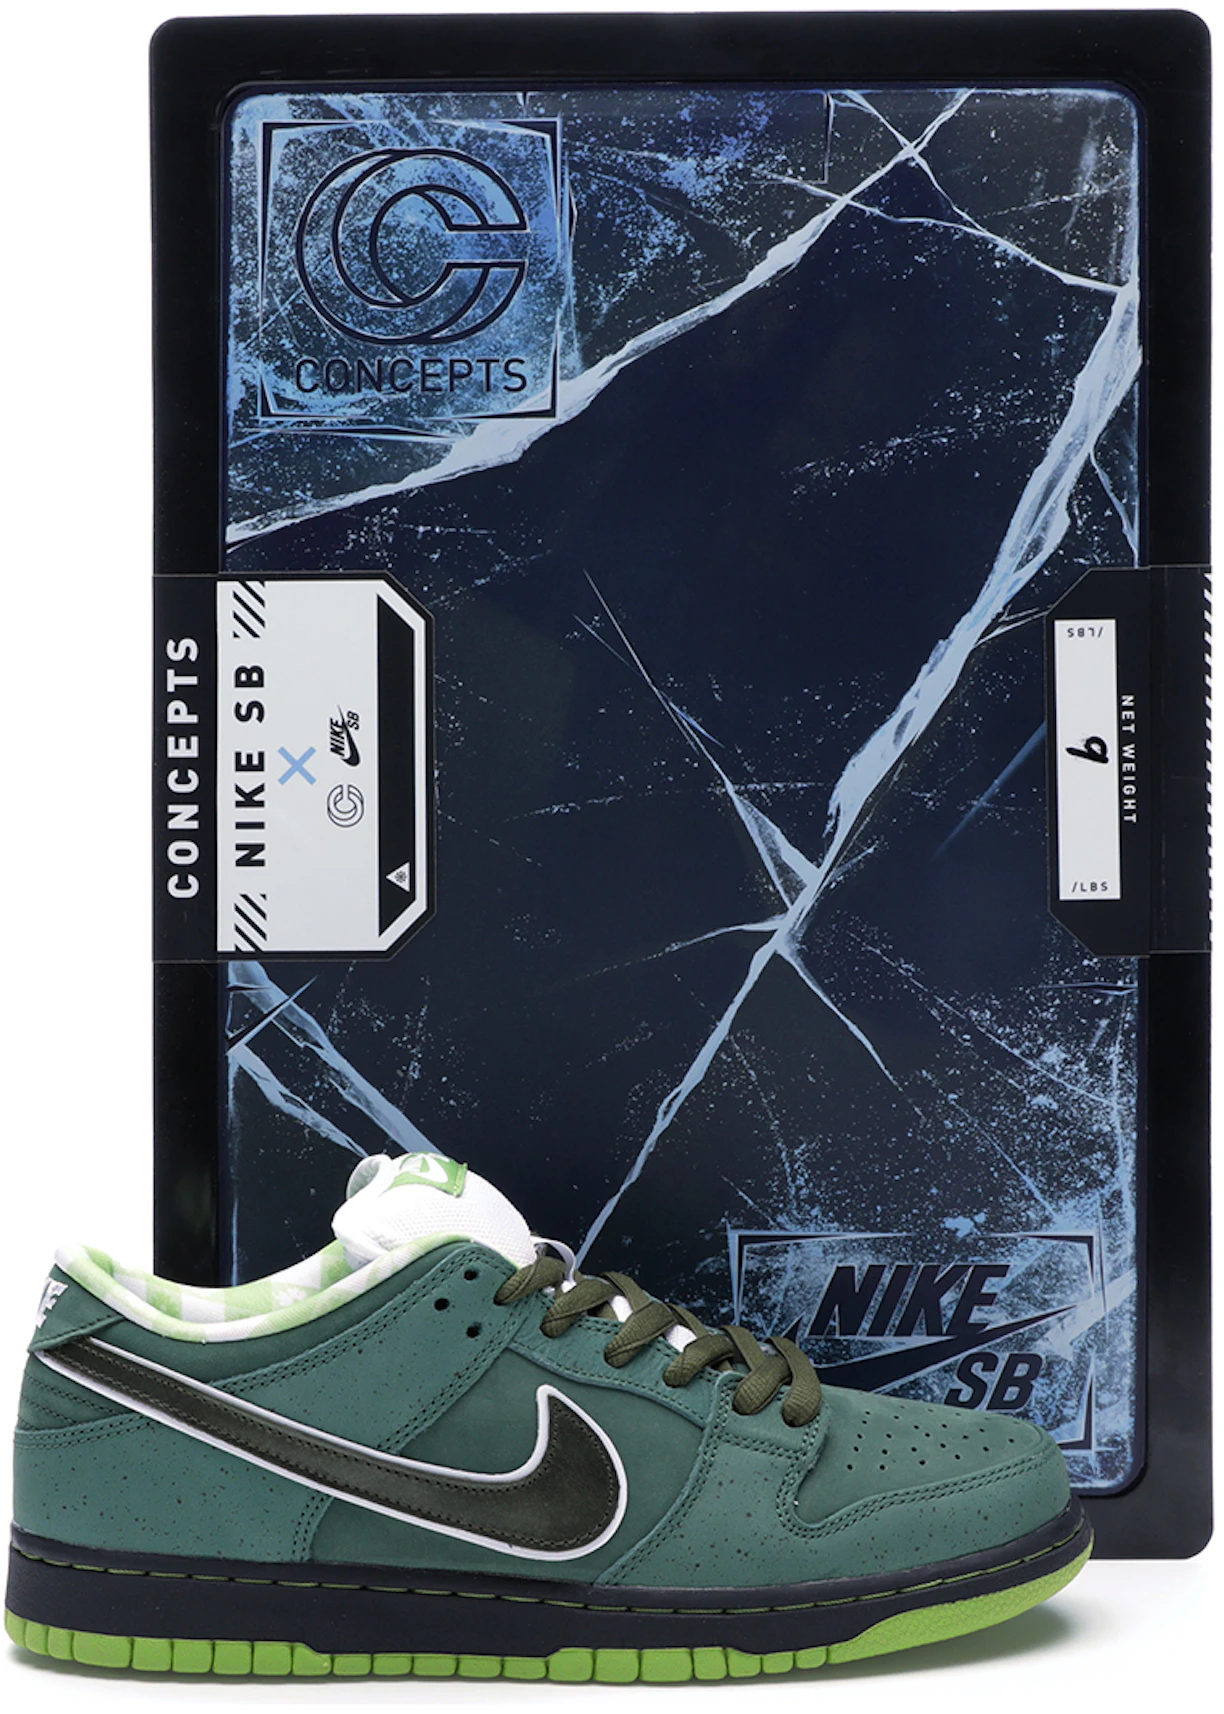 Nike SB Dunk Low Concepts Green (Special Box) - BV1310-337 - ES